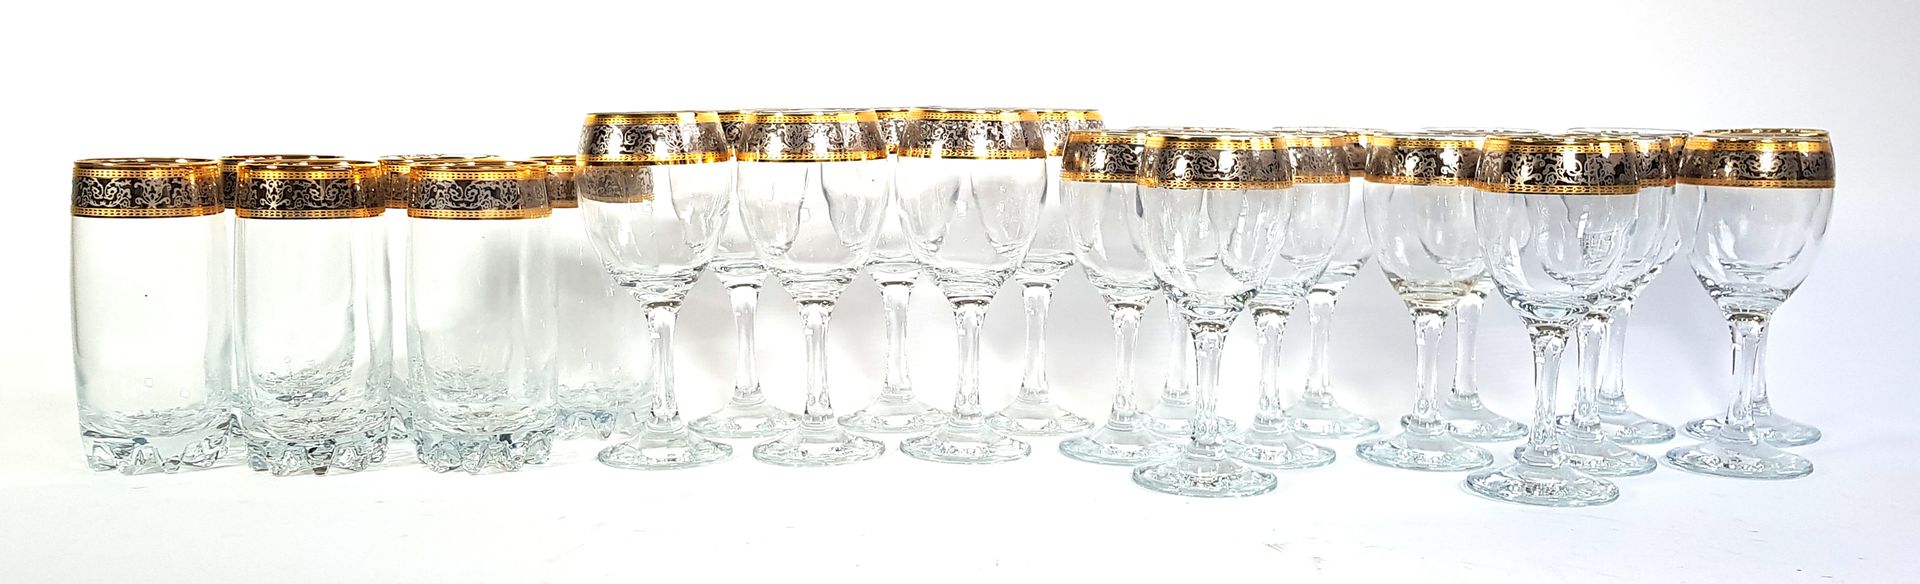 Null 金银色卷轴装饰的玻璃餐具，包括六个橙汁高脚杯，六个水杯和十二个酒杯

H.14,5 - 17和16厘米

穿着于装饰